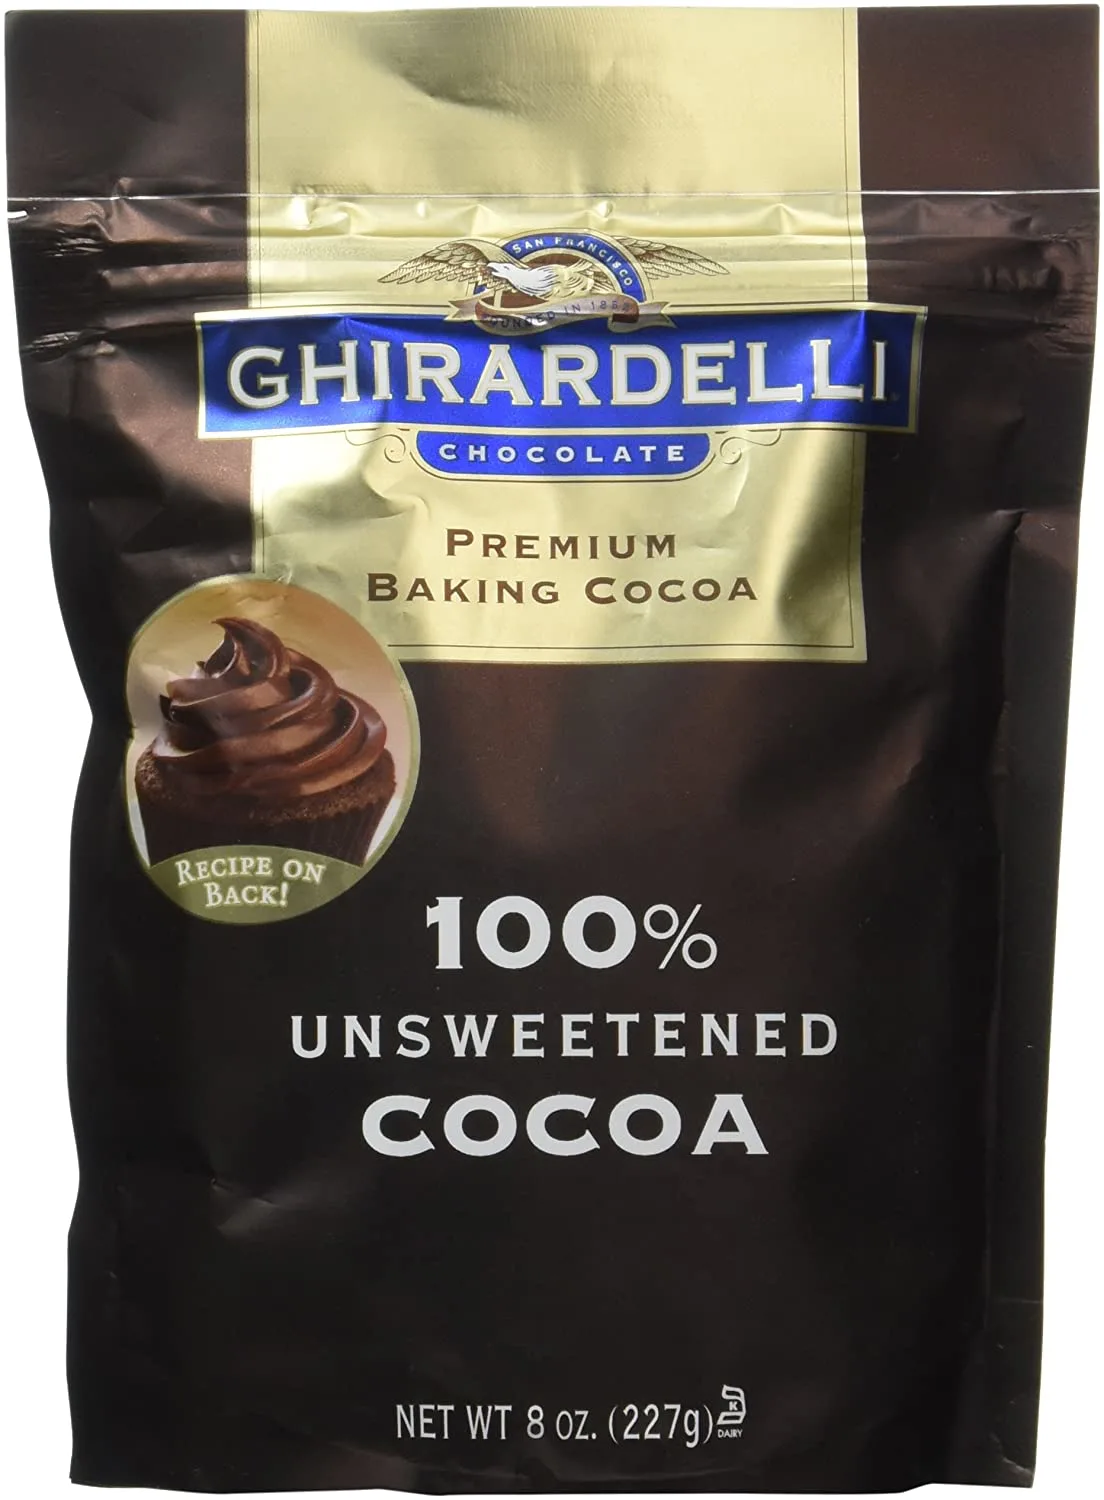 Ghirardelli Premium Baking Cocoa, 100% Unsweetened
